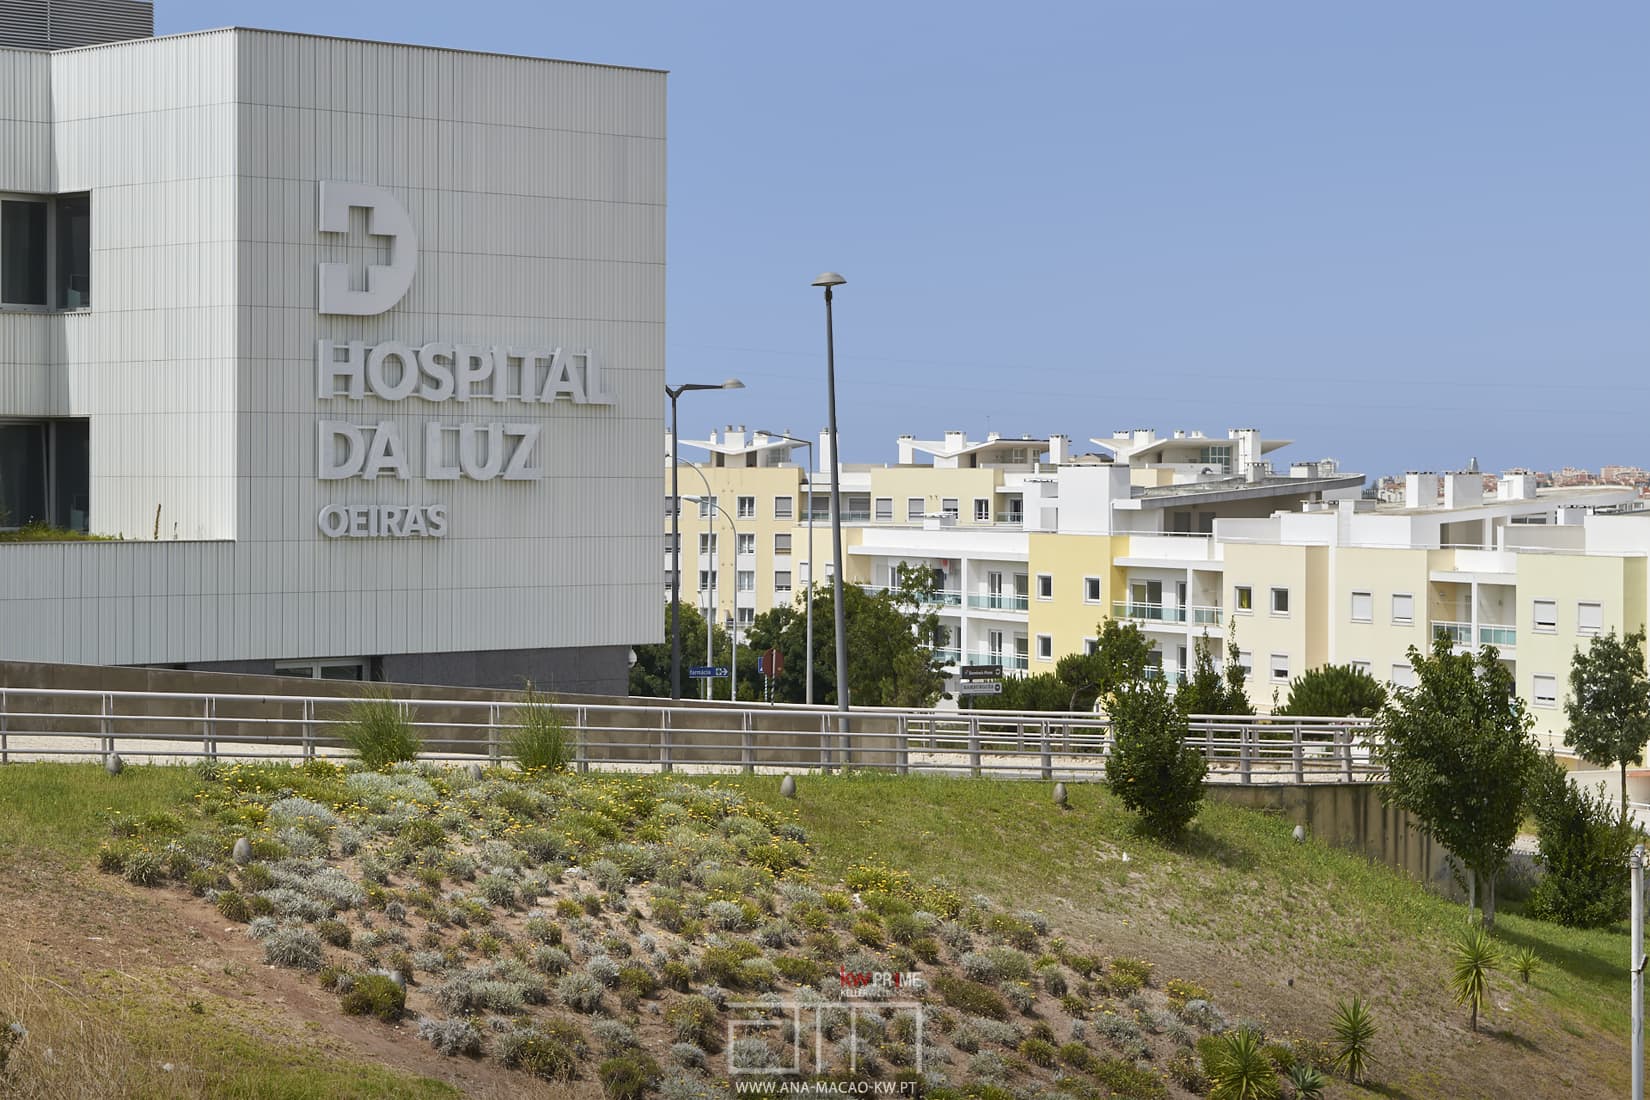 Hospital da Luz à côté du Fórum Oeiras